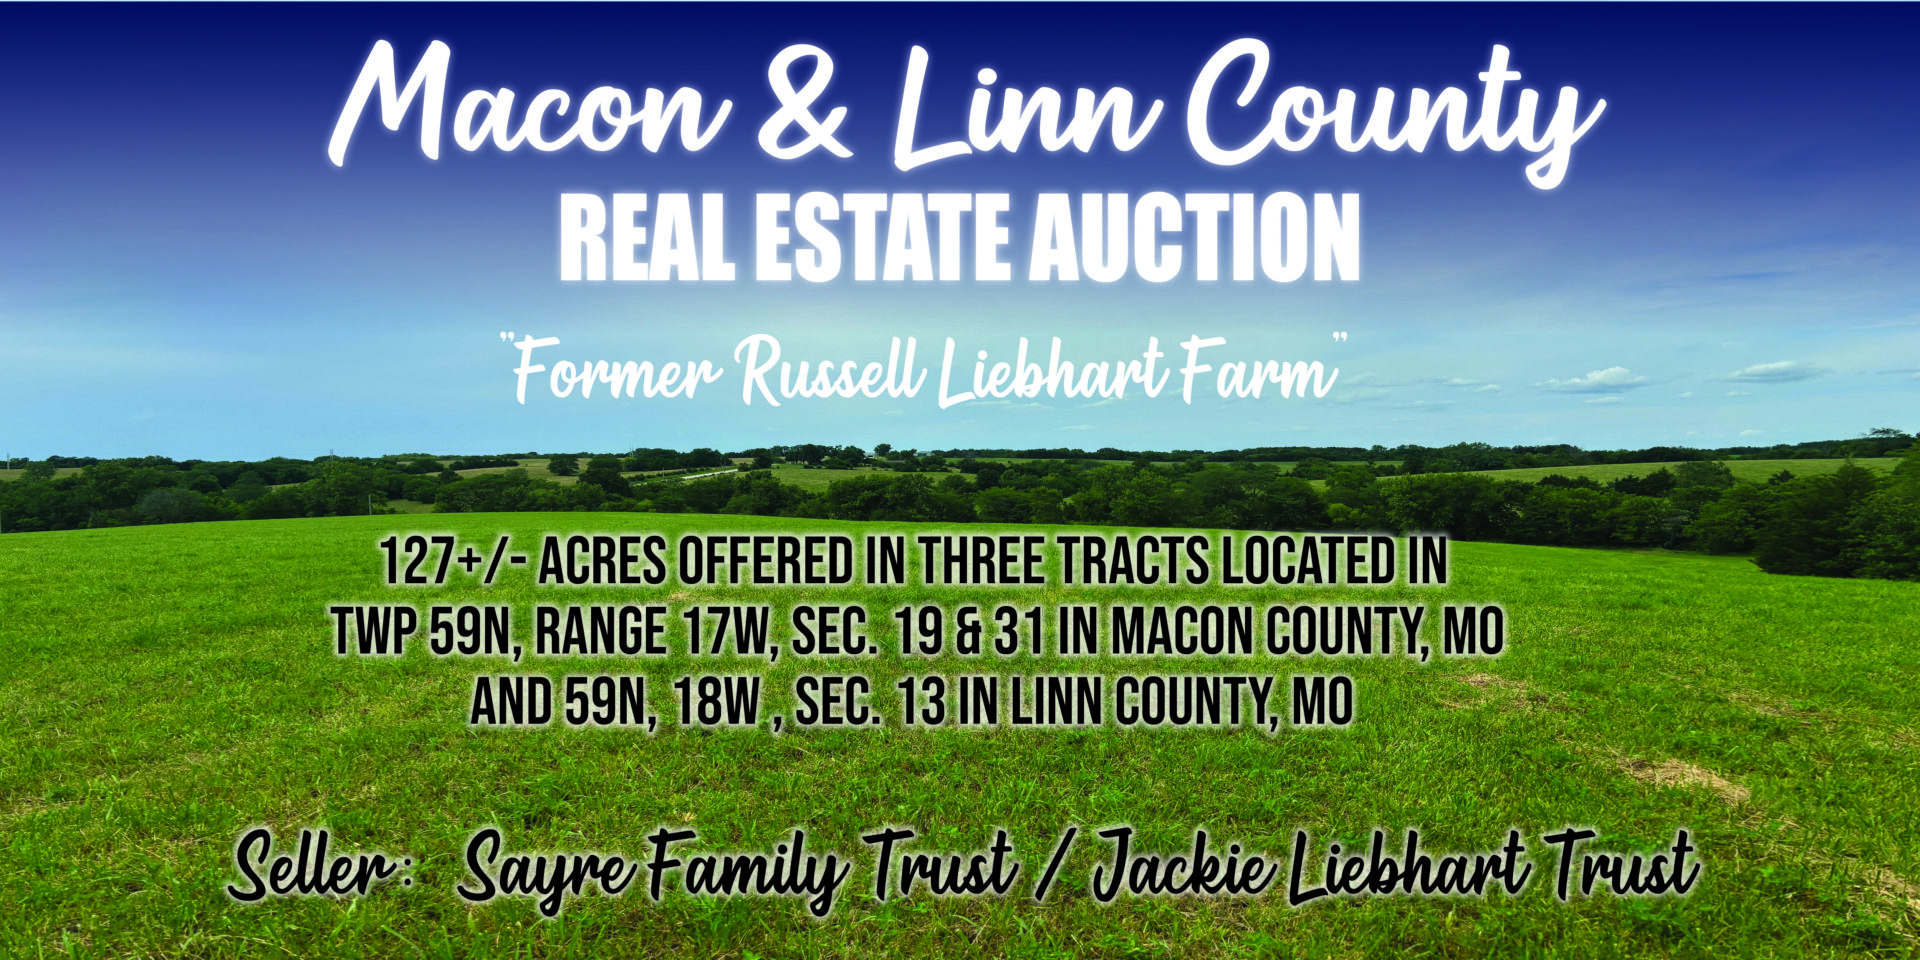 Linn & Macon County Real Estate Auction